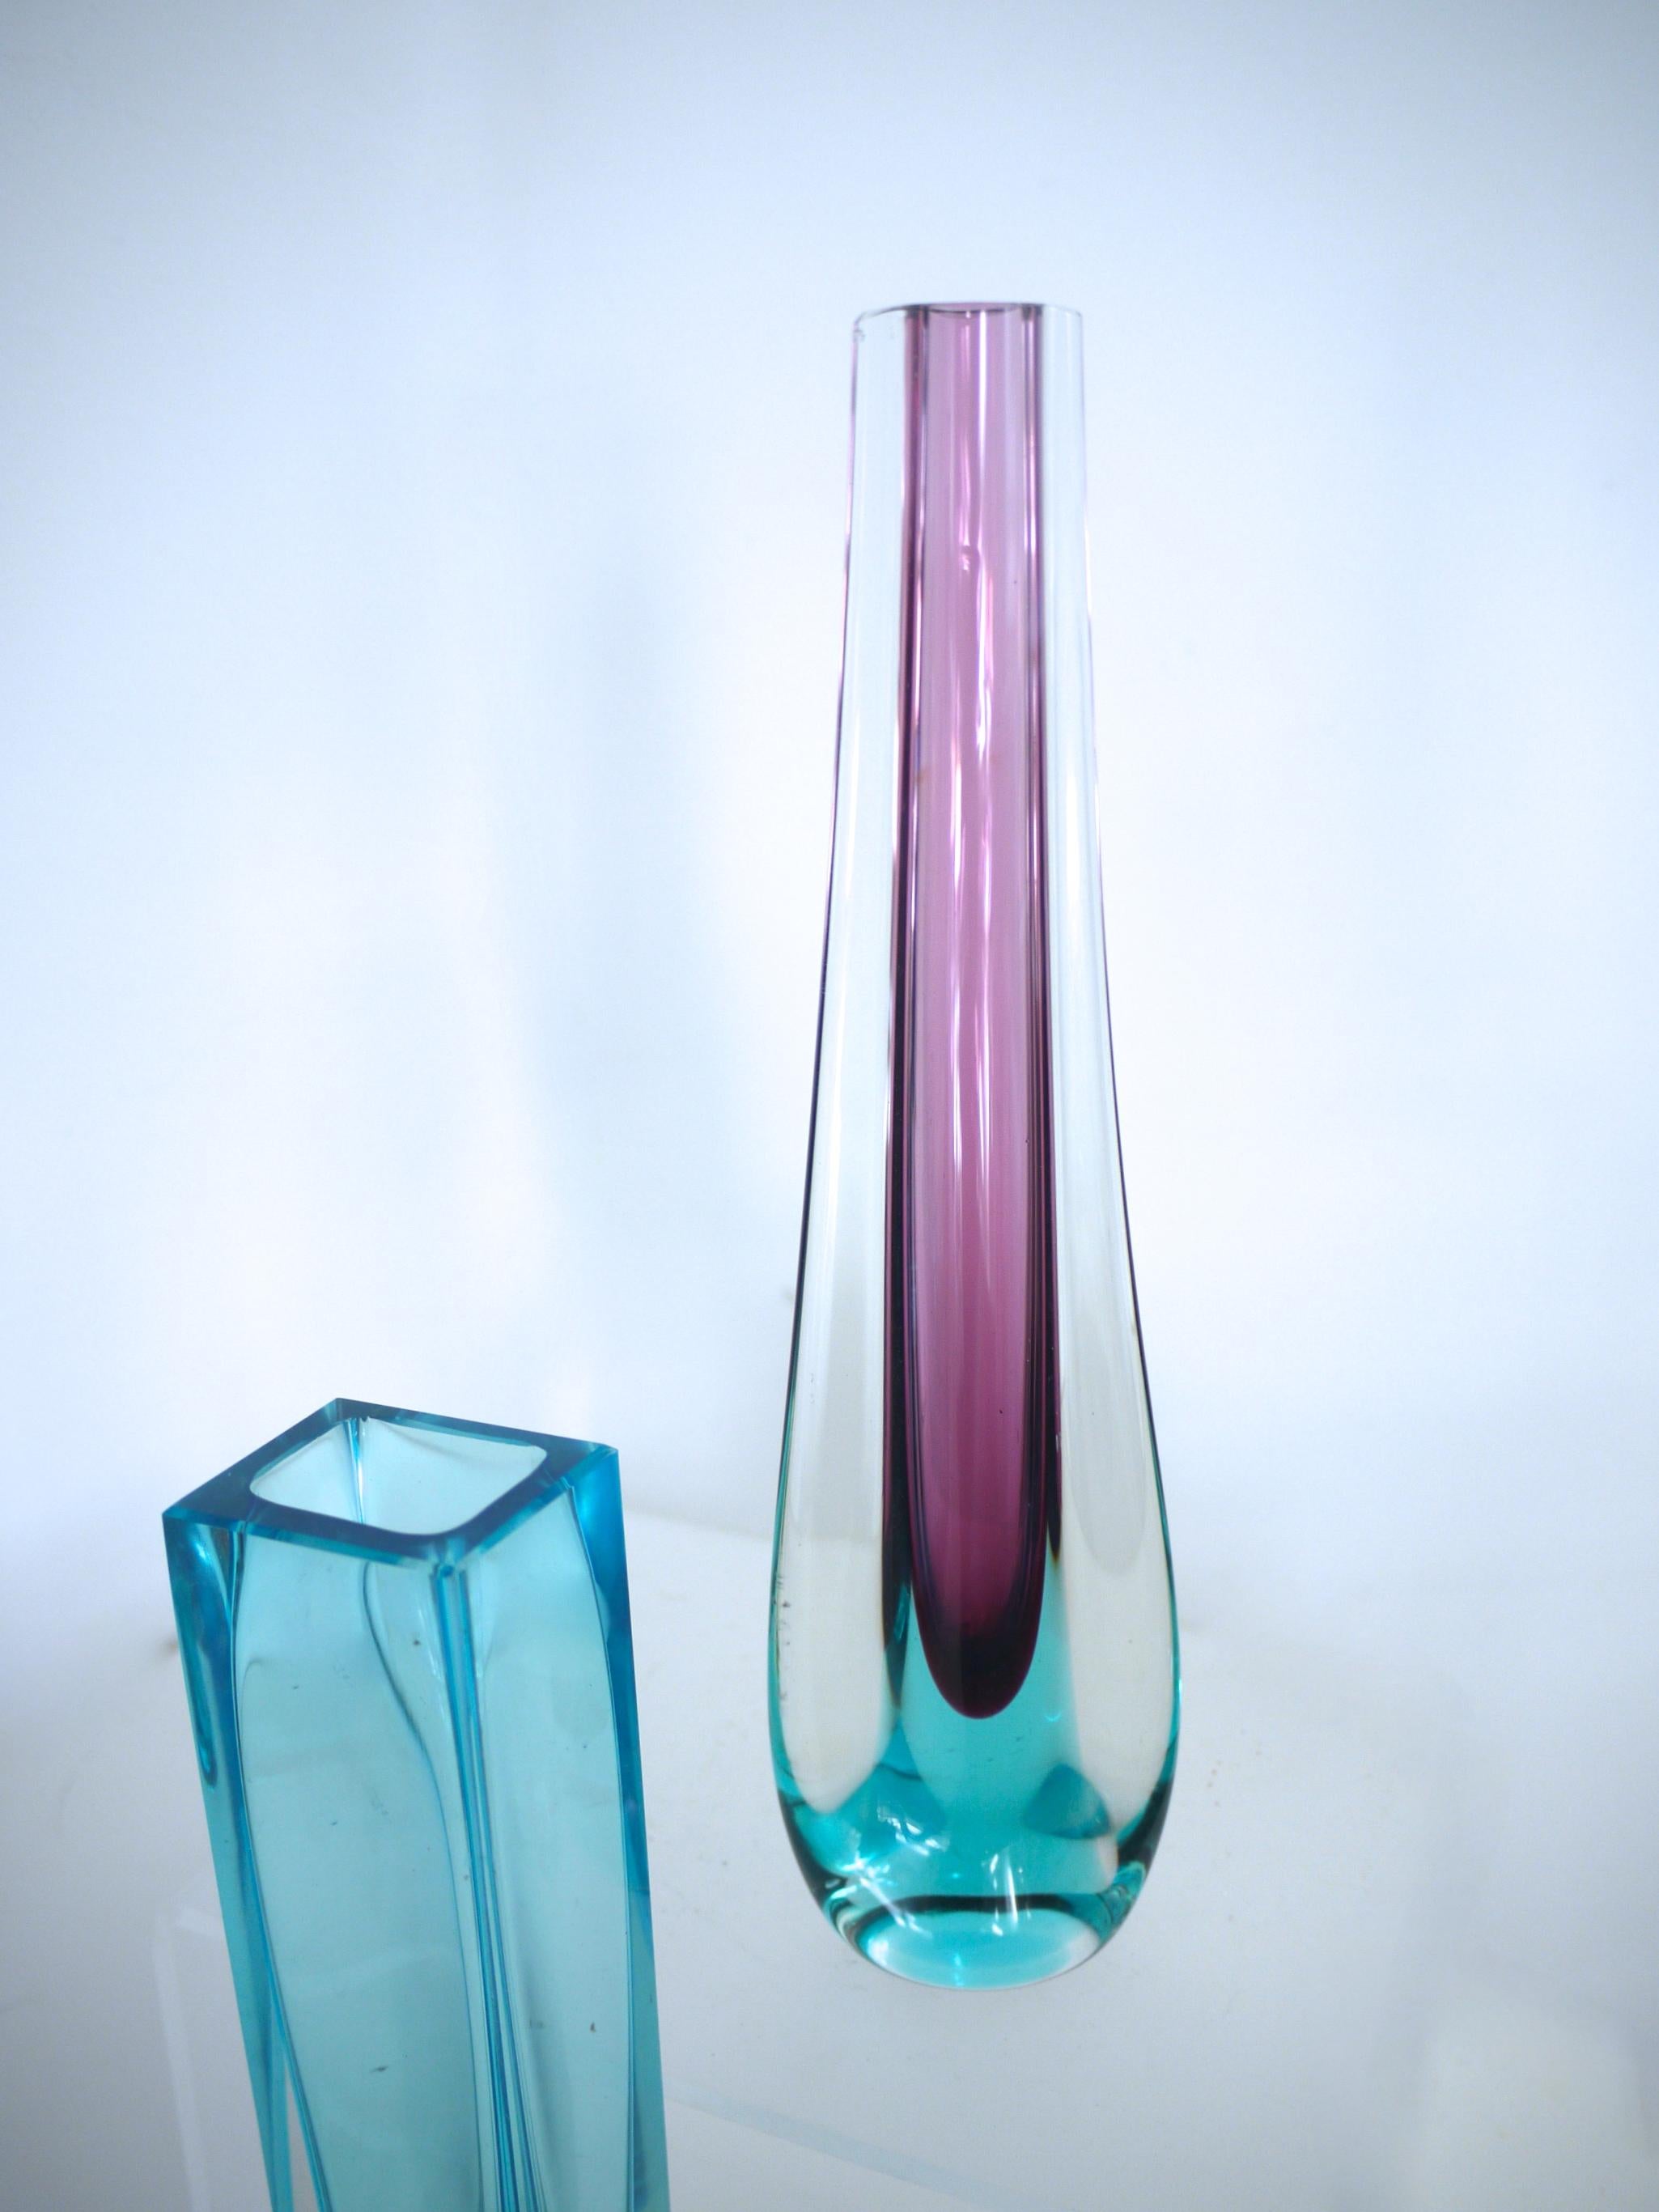 Modernist glass vases Murano teardrop by Ferro and 'Block' Vase by Nuutajarvi.
Pair of Scandinavian Modernist Glass Pillar Vases by Nuutajarvi Notsjo 

Nuutajarvi Notsjo was established in 1793, in Urjala, Finland, . Nuutajarvi merged with